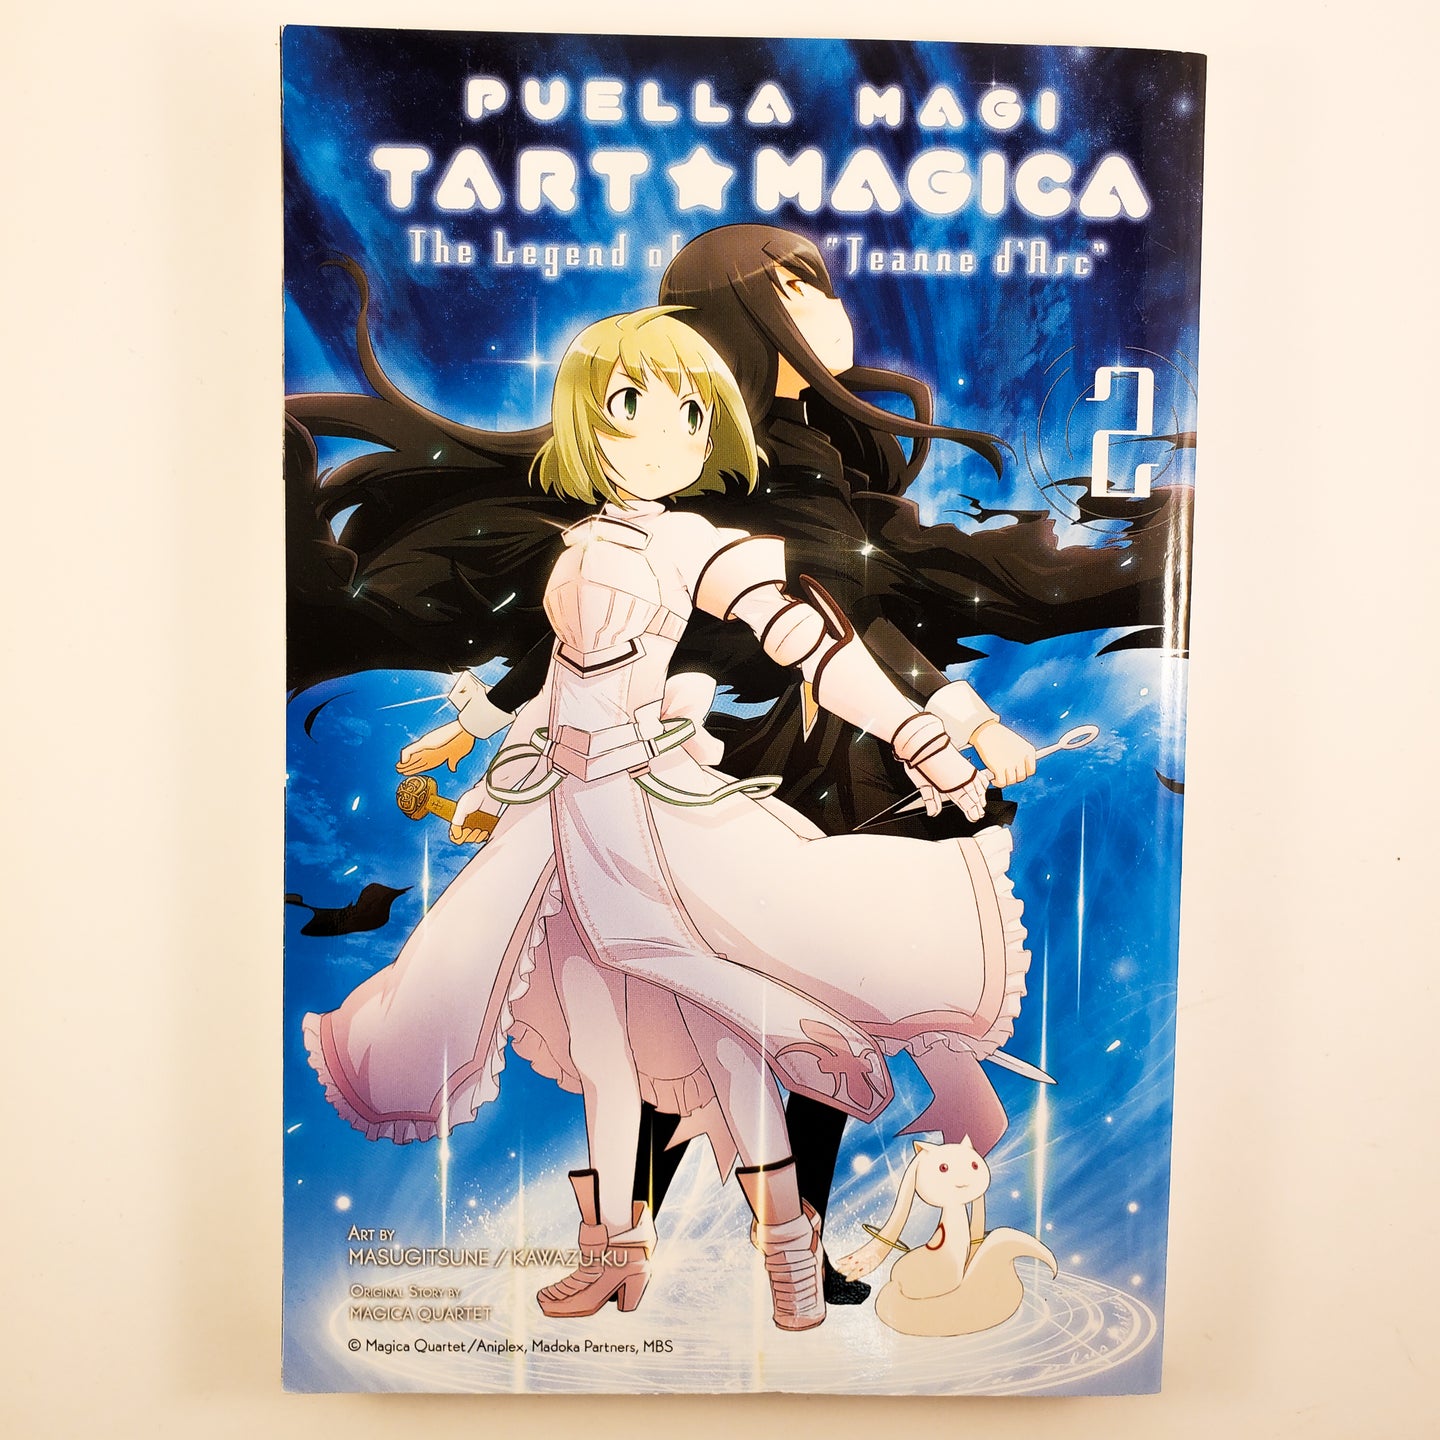 Puella Magi Tart Magica: The Legend of Jeanne d'Arc Volume 2. Manga by Masugitsune / Kawazuku and Magic Quartet.